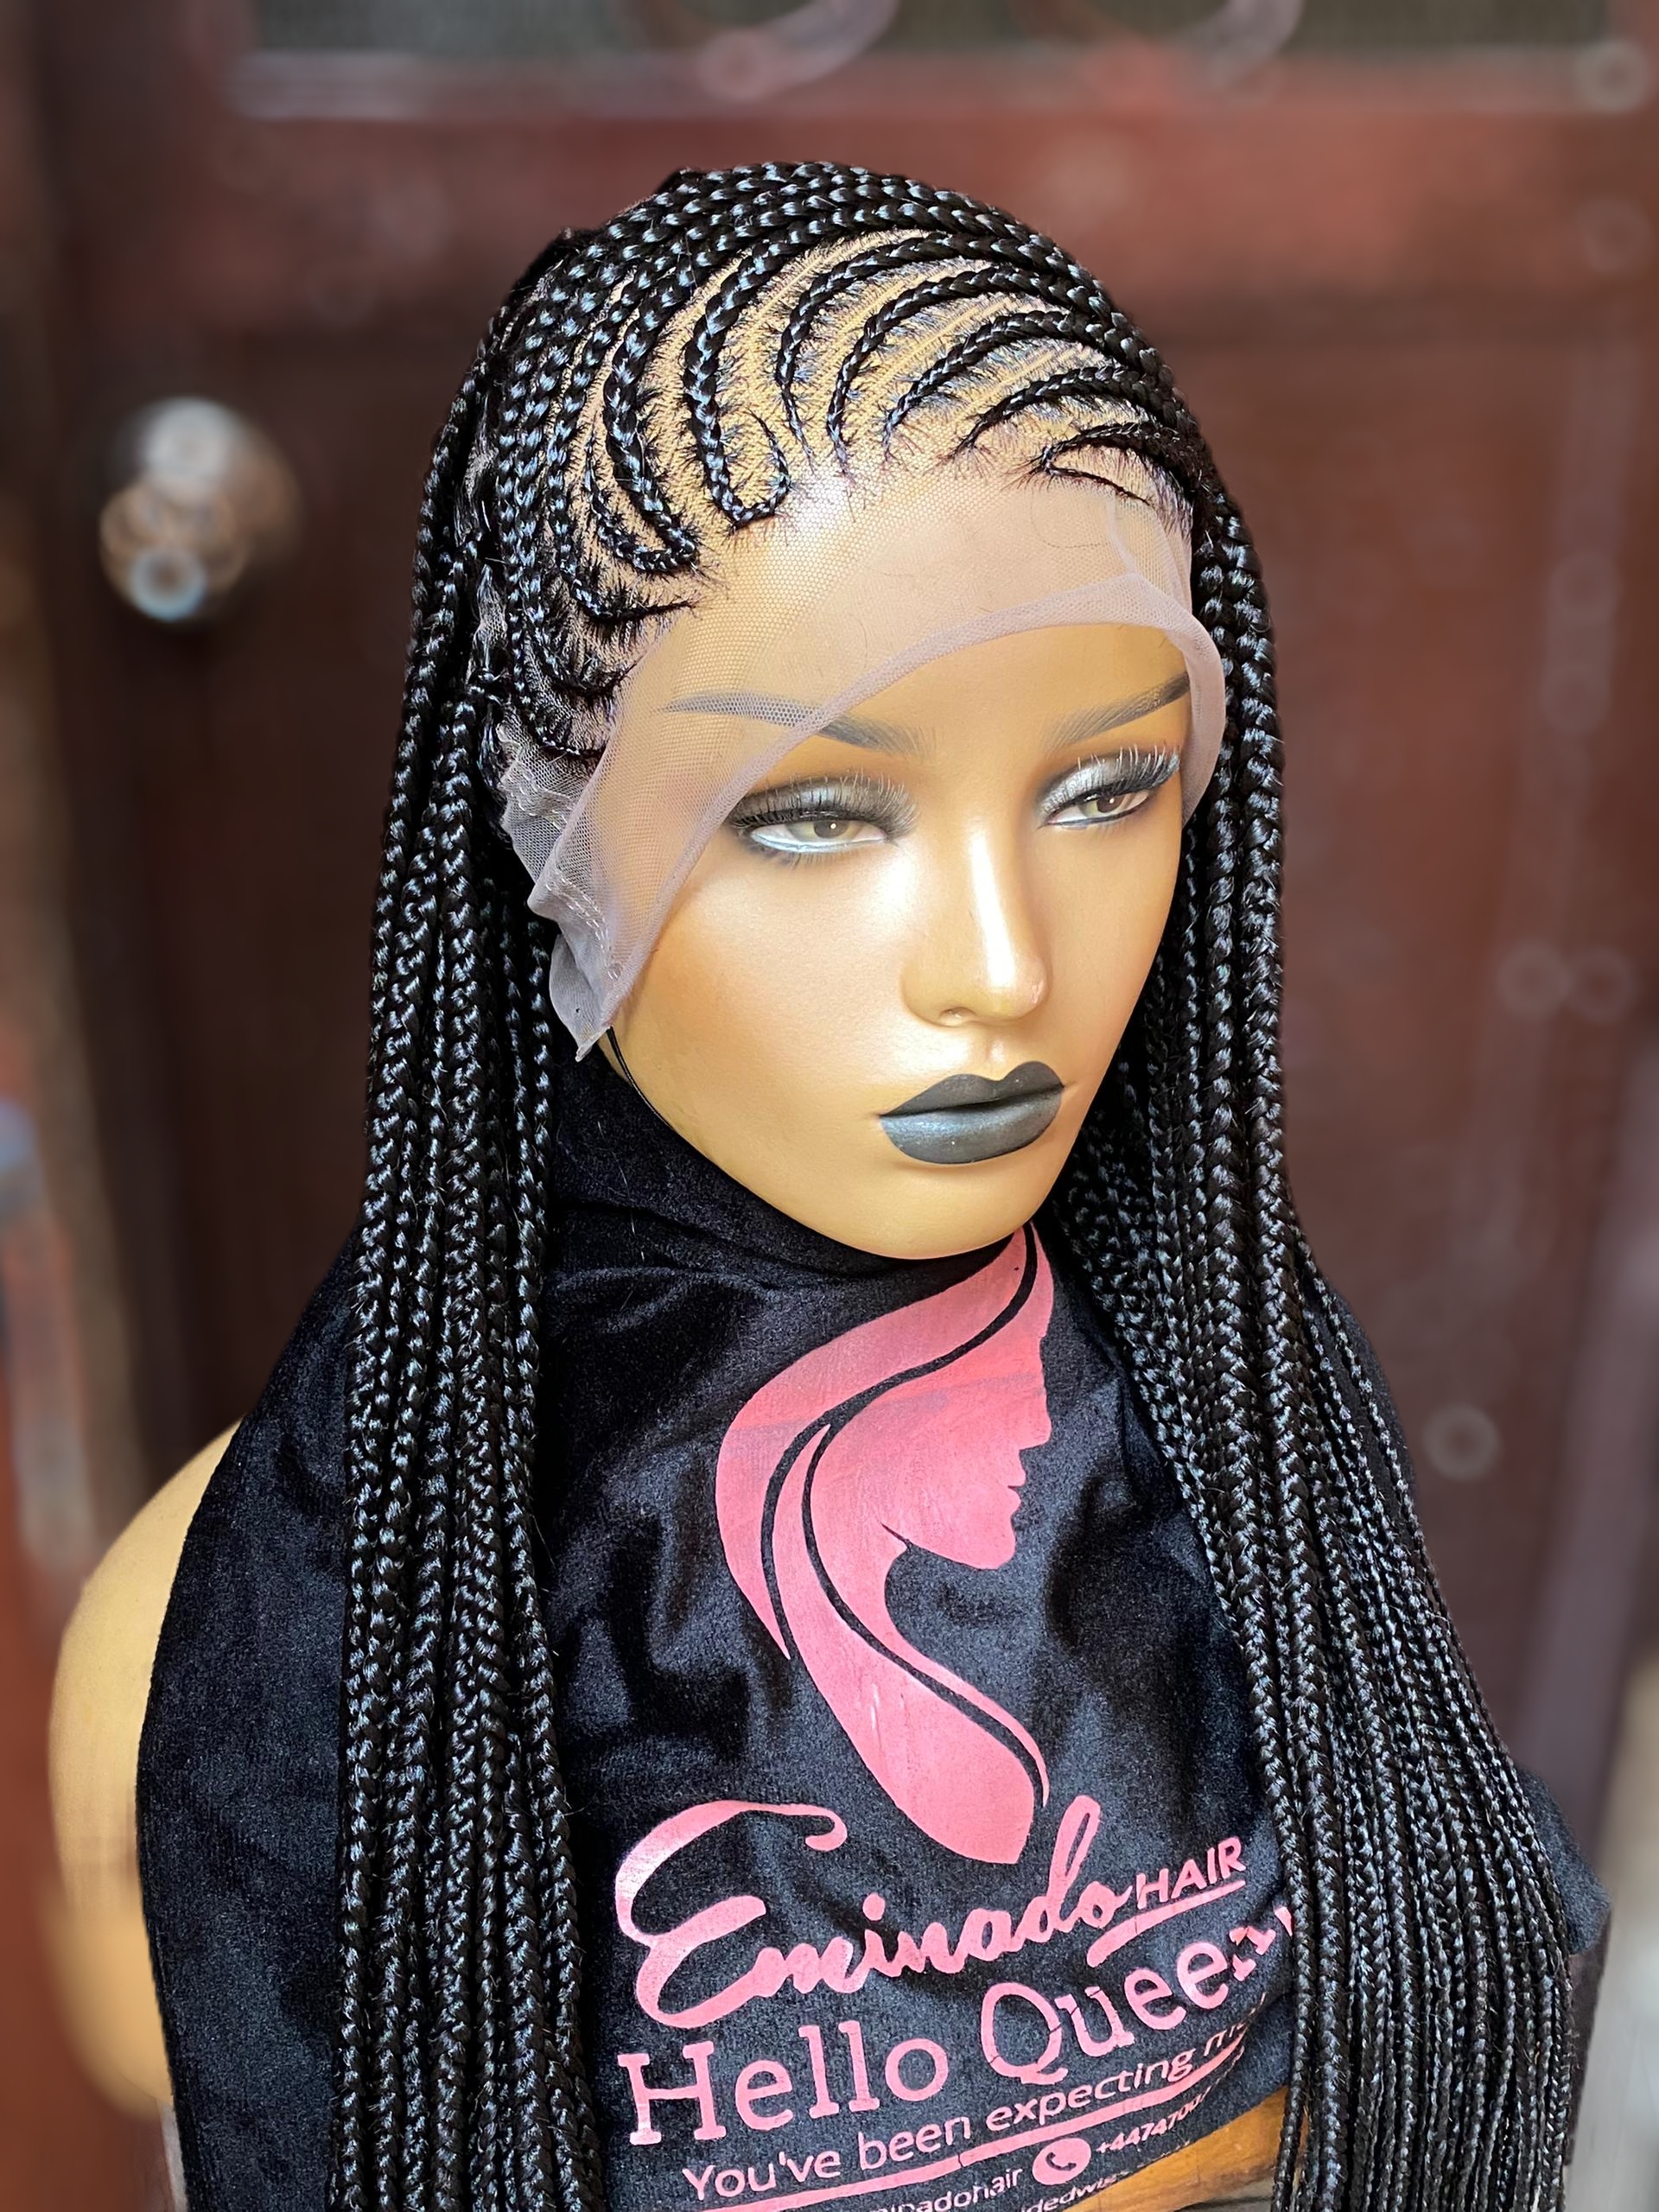 braided wig: handmade cornrow Ghana weave Braid. Full lace 3-4wks